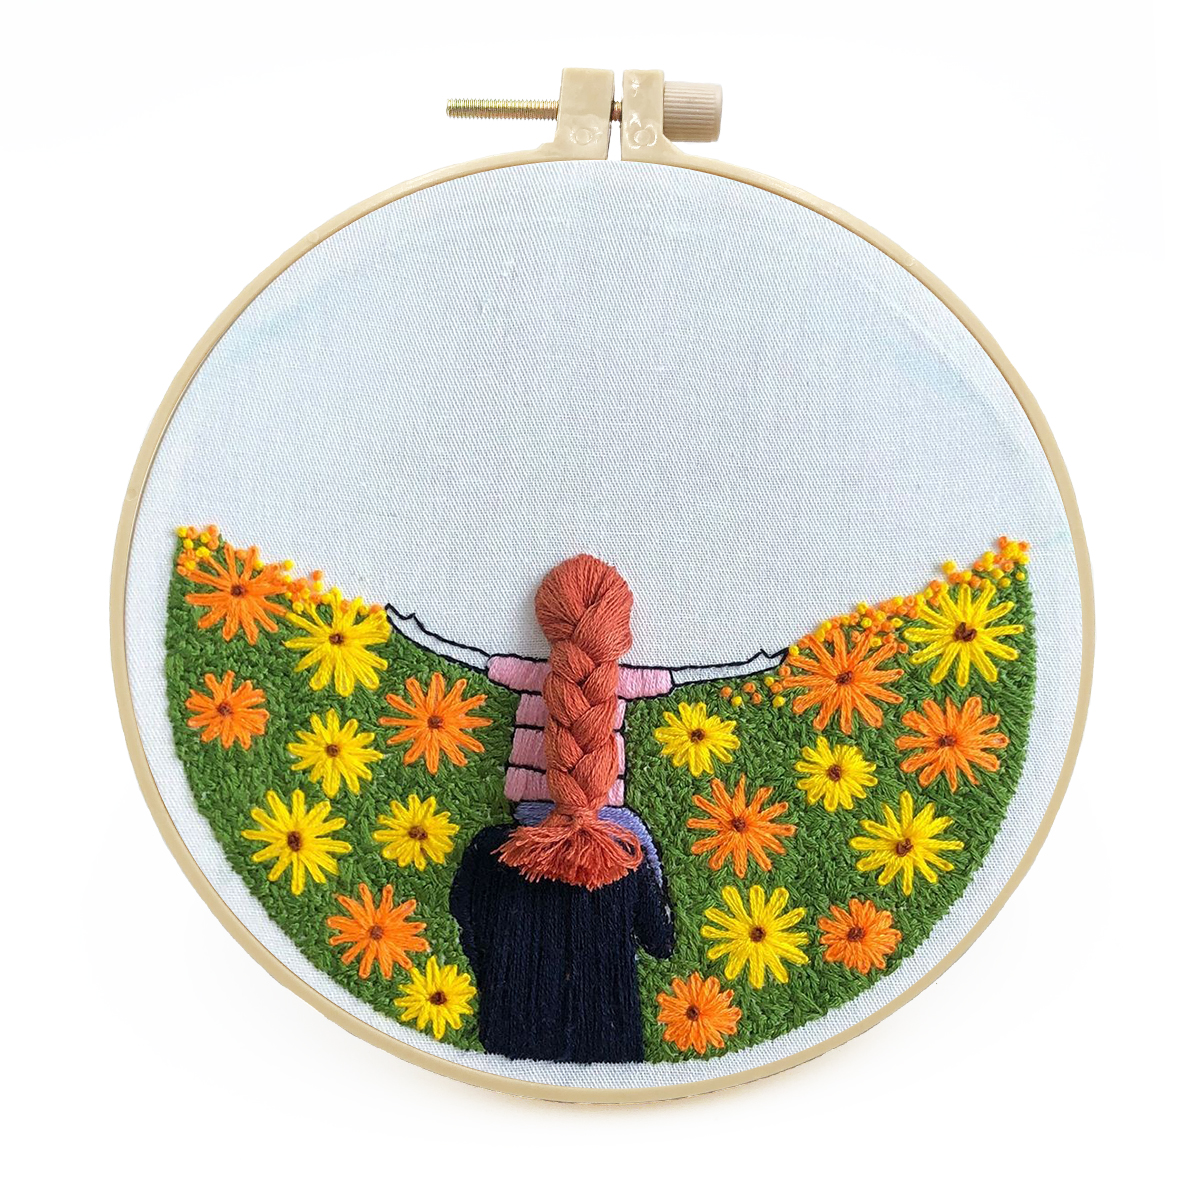 Embroidery Starter Kit Cross stitch kit for Adult Beginner -Girl and Flower pattern